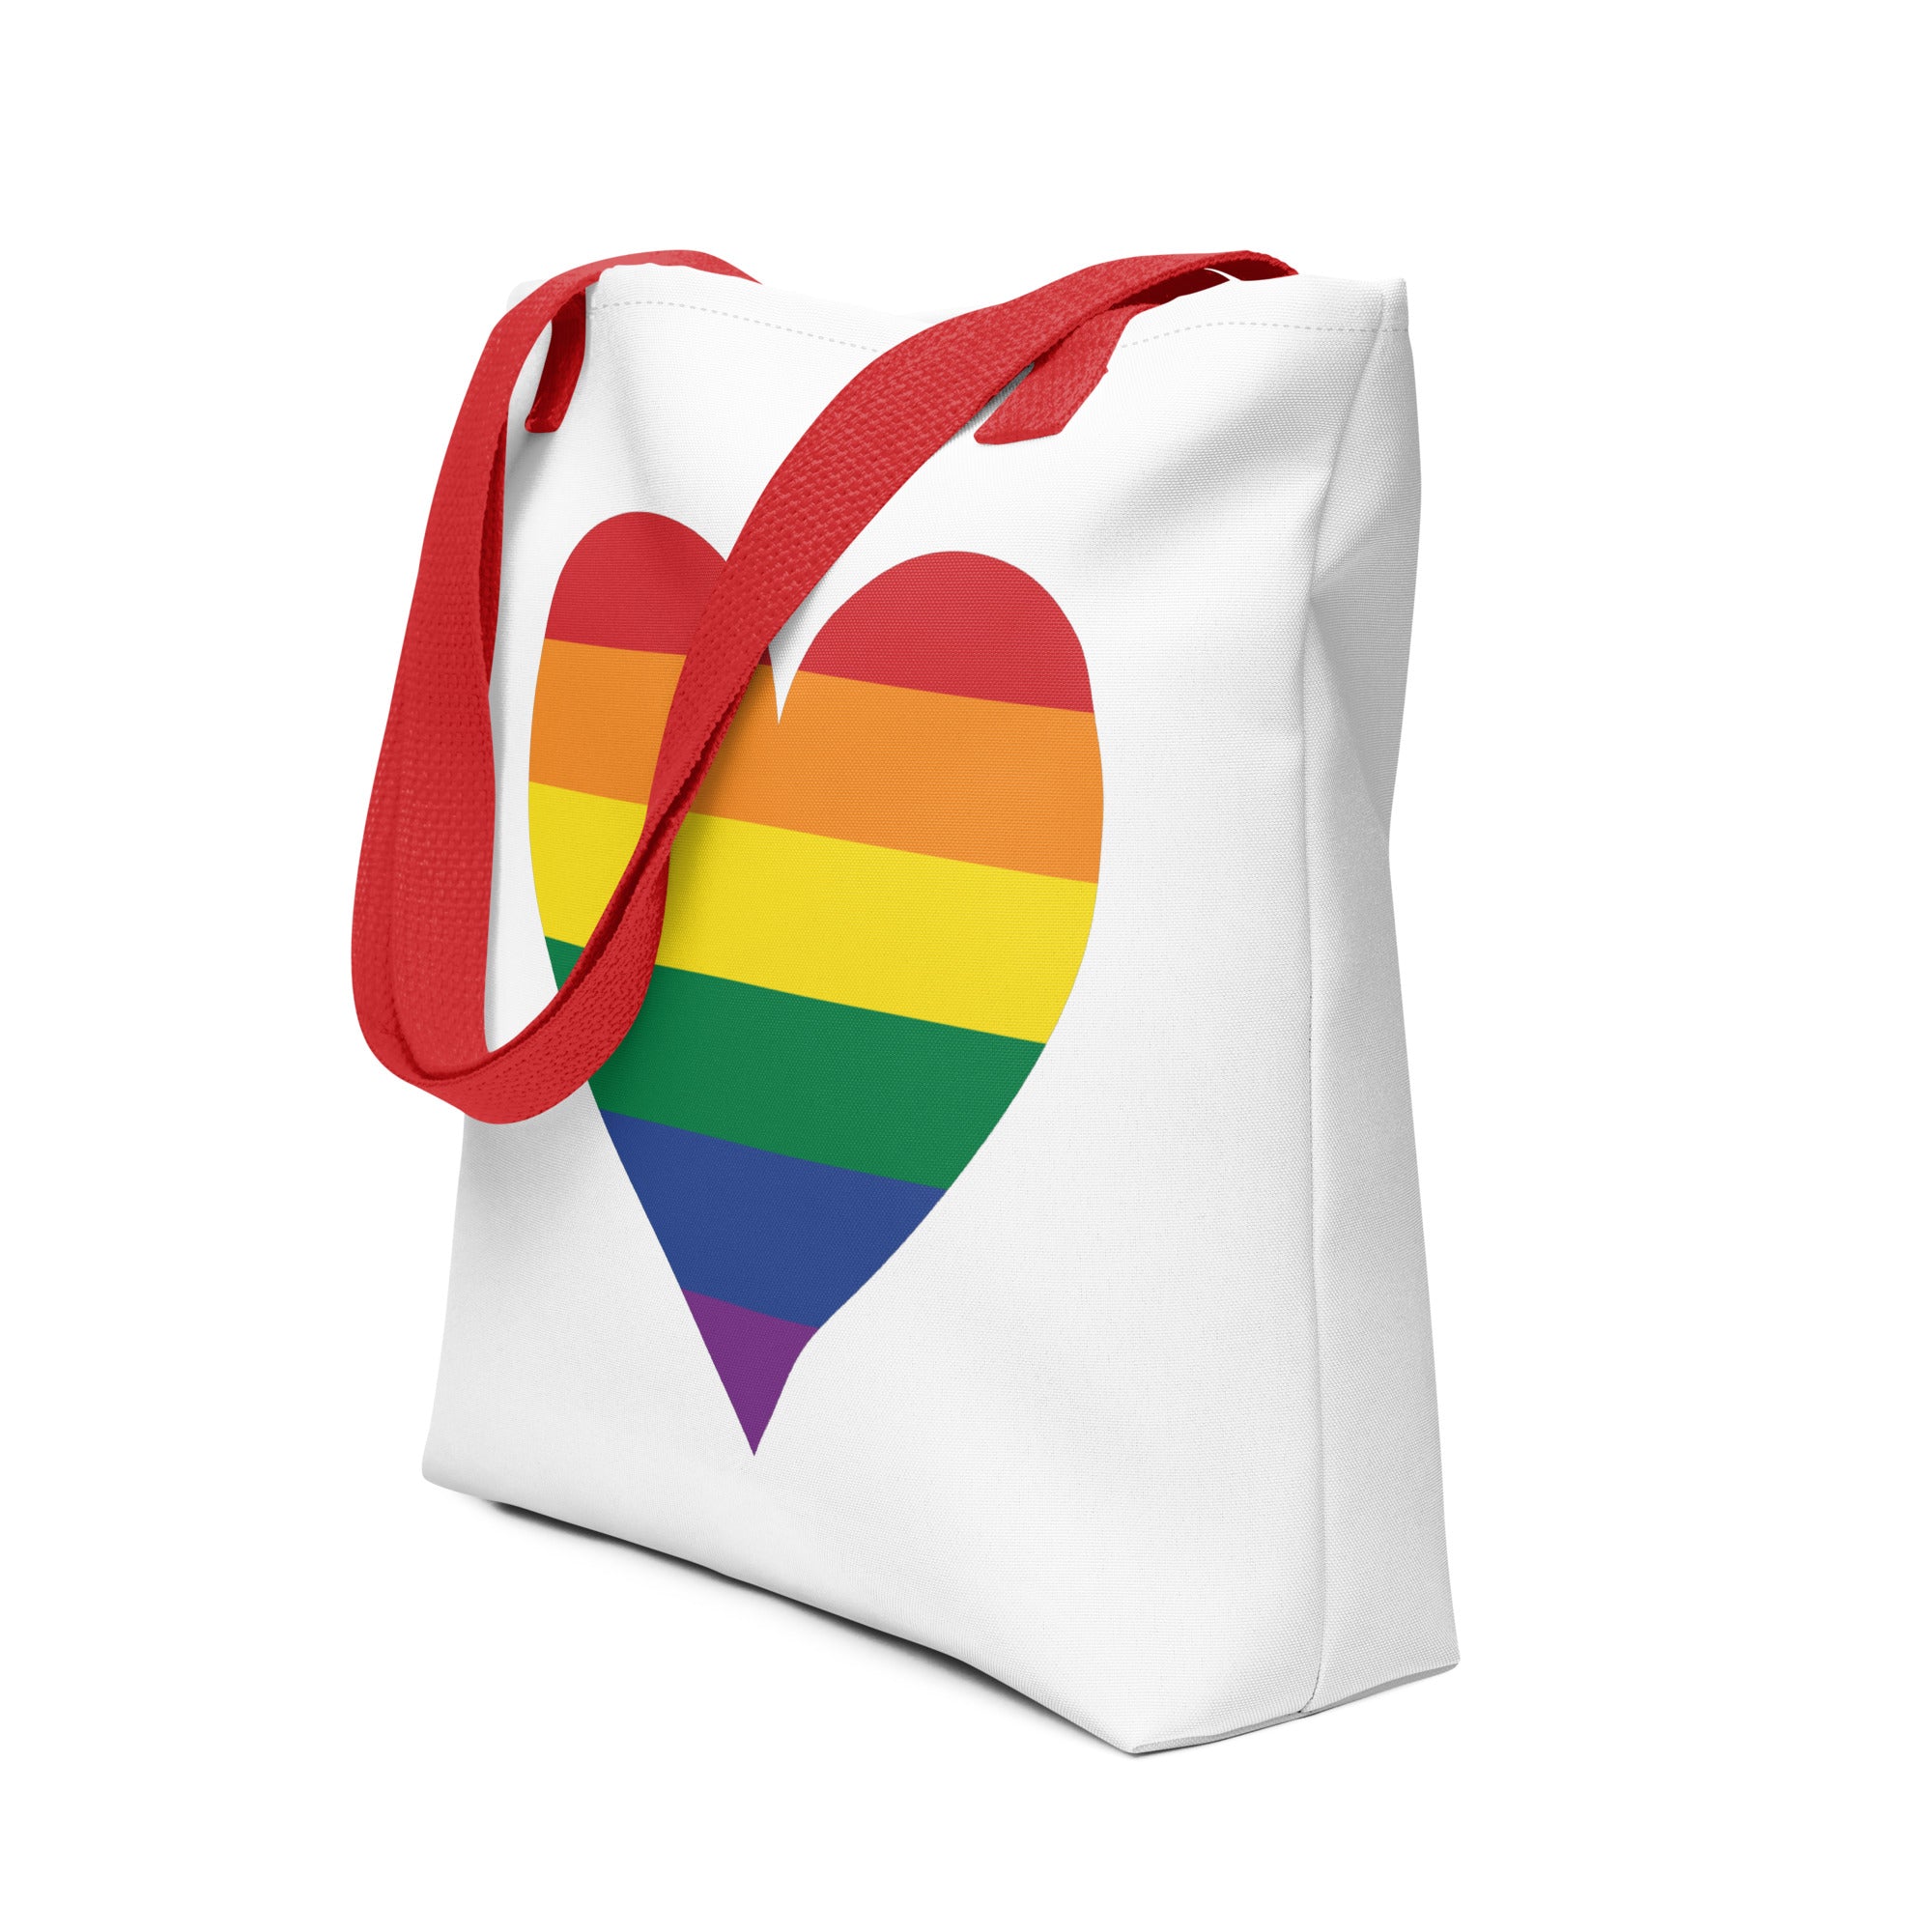 Tote bag- Pride Rainbow Heart